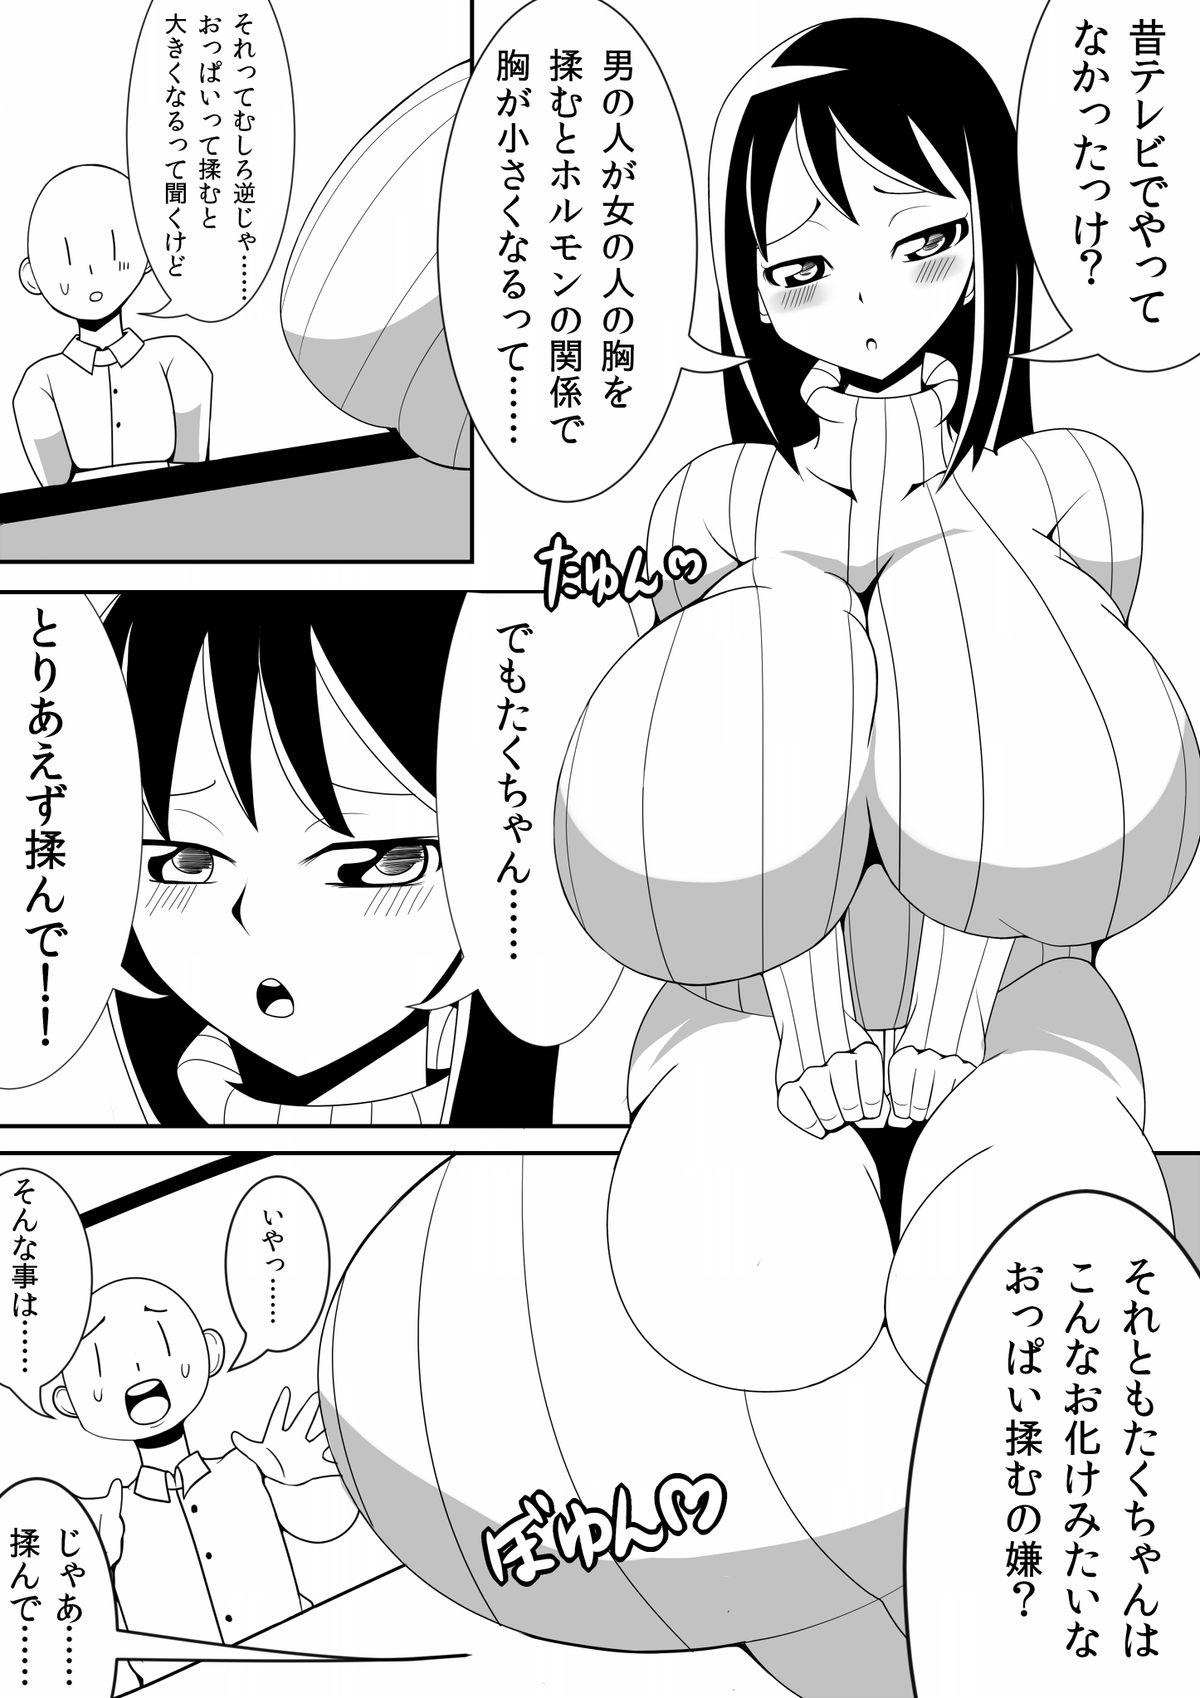 All Asaokitara Oppai Konnani ga Okkiku Nacchatta High Heels - Page 5